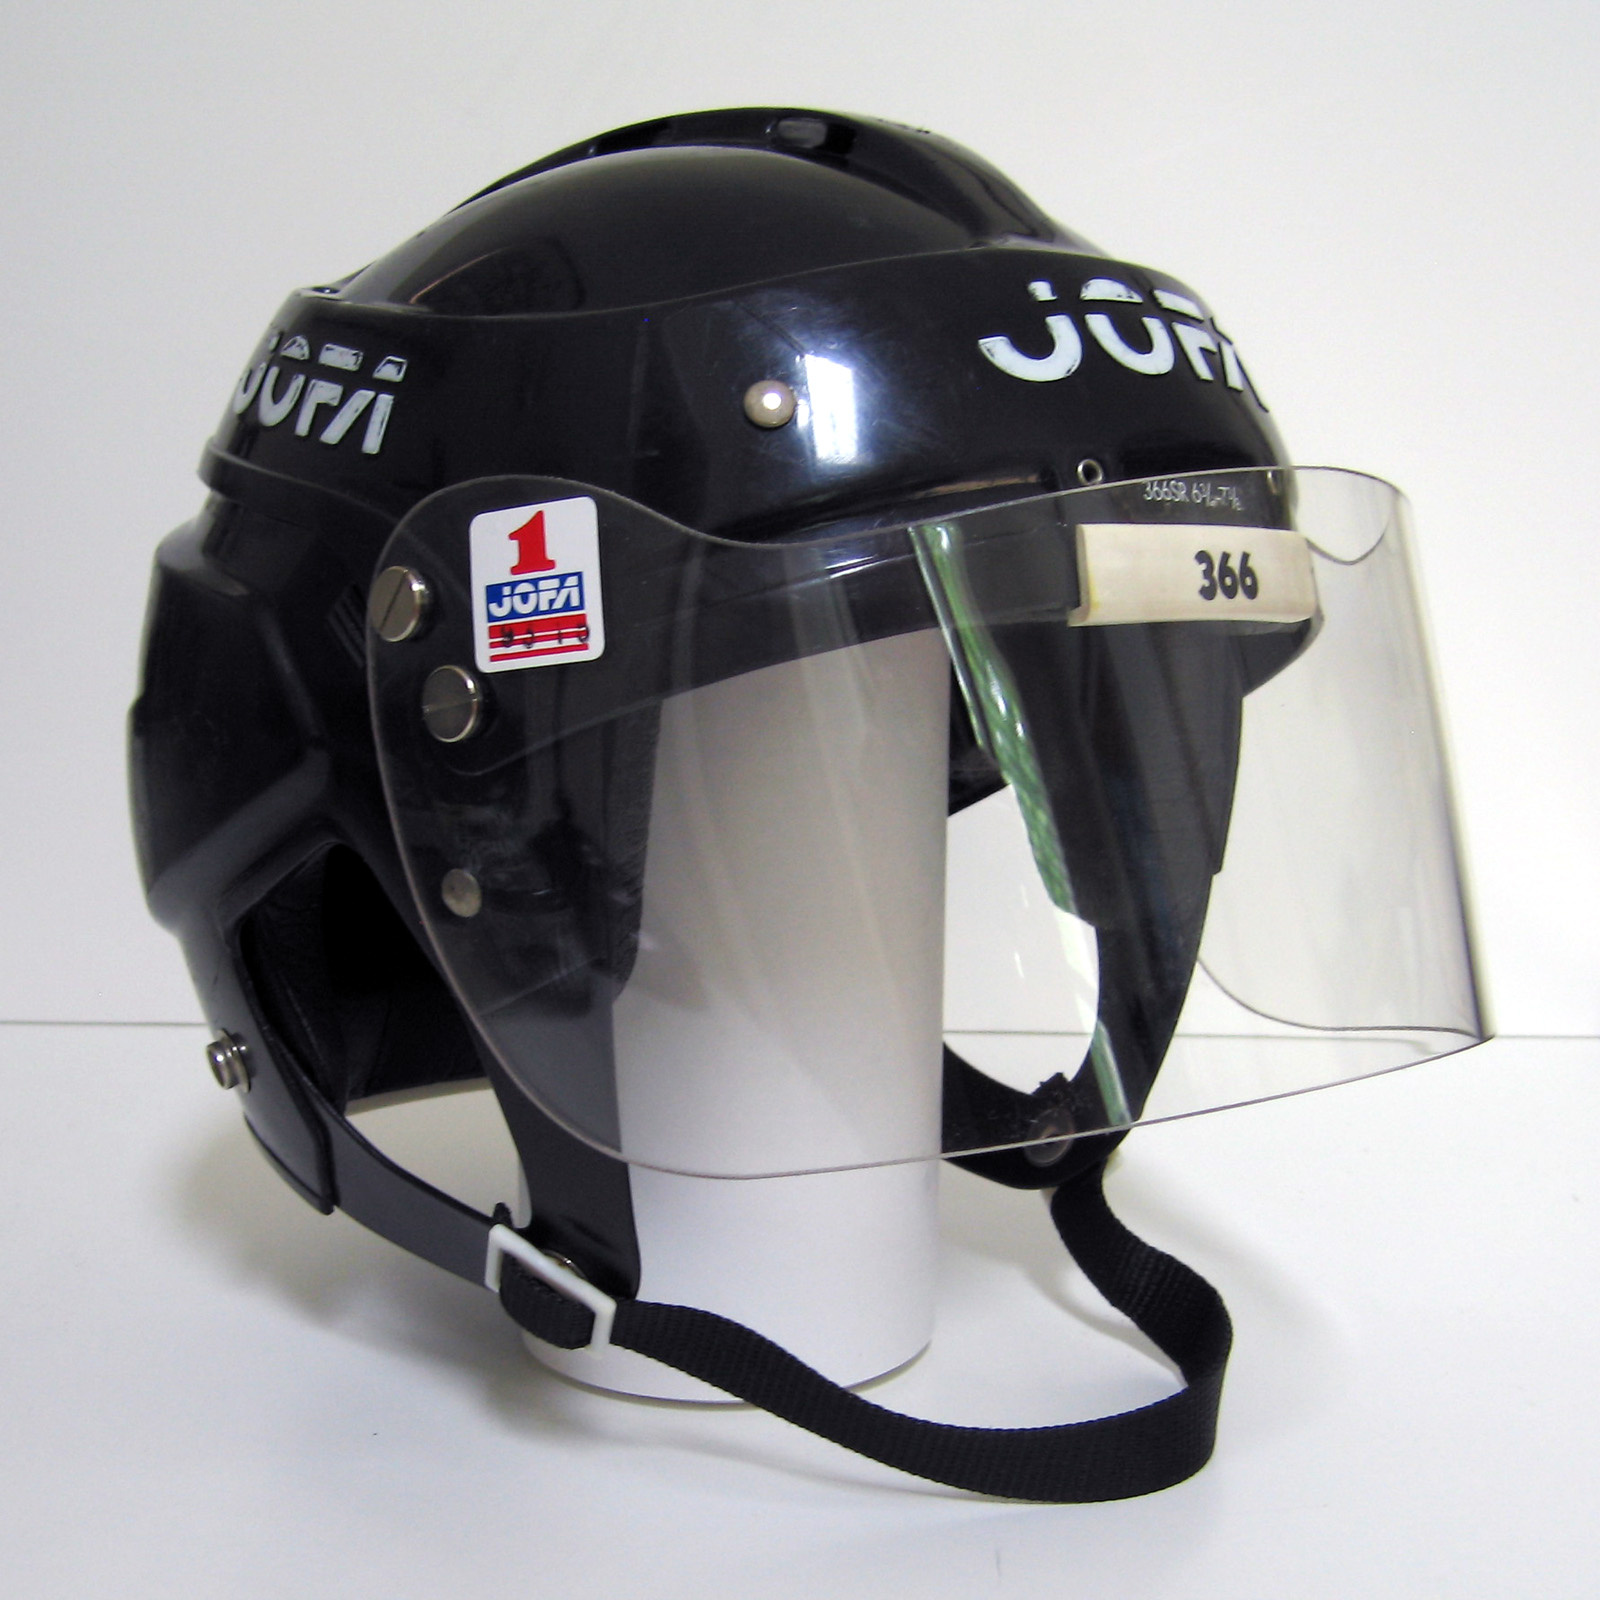 jofa-helmets-halos-of-hockey-the-jofa-390-jaromir-jagr-edition